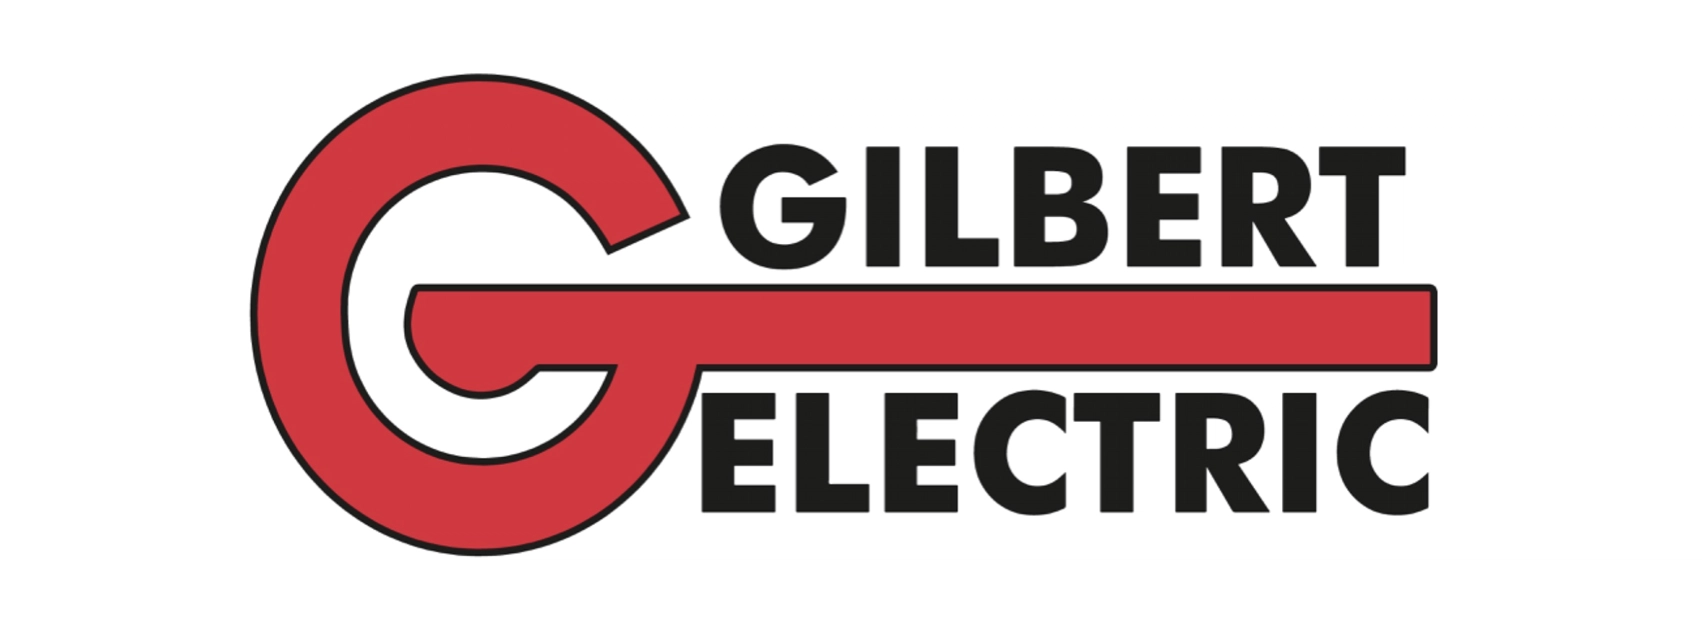 GILBERT ELECTRIC Logo